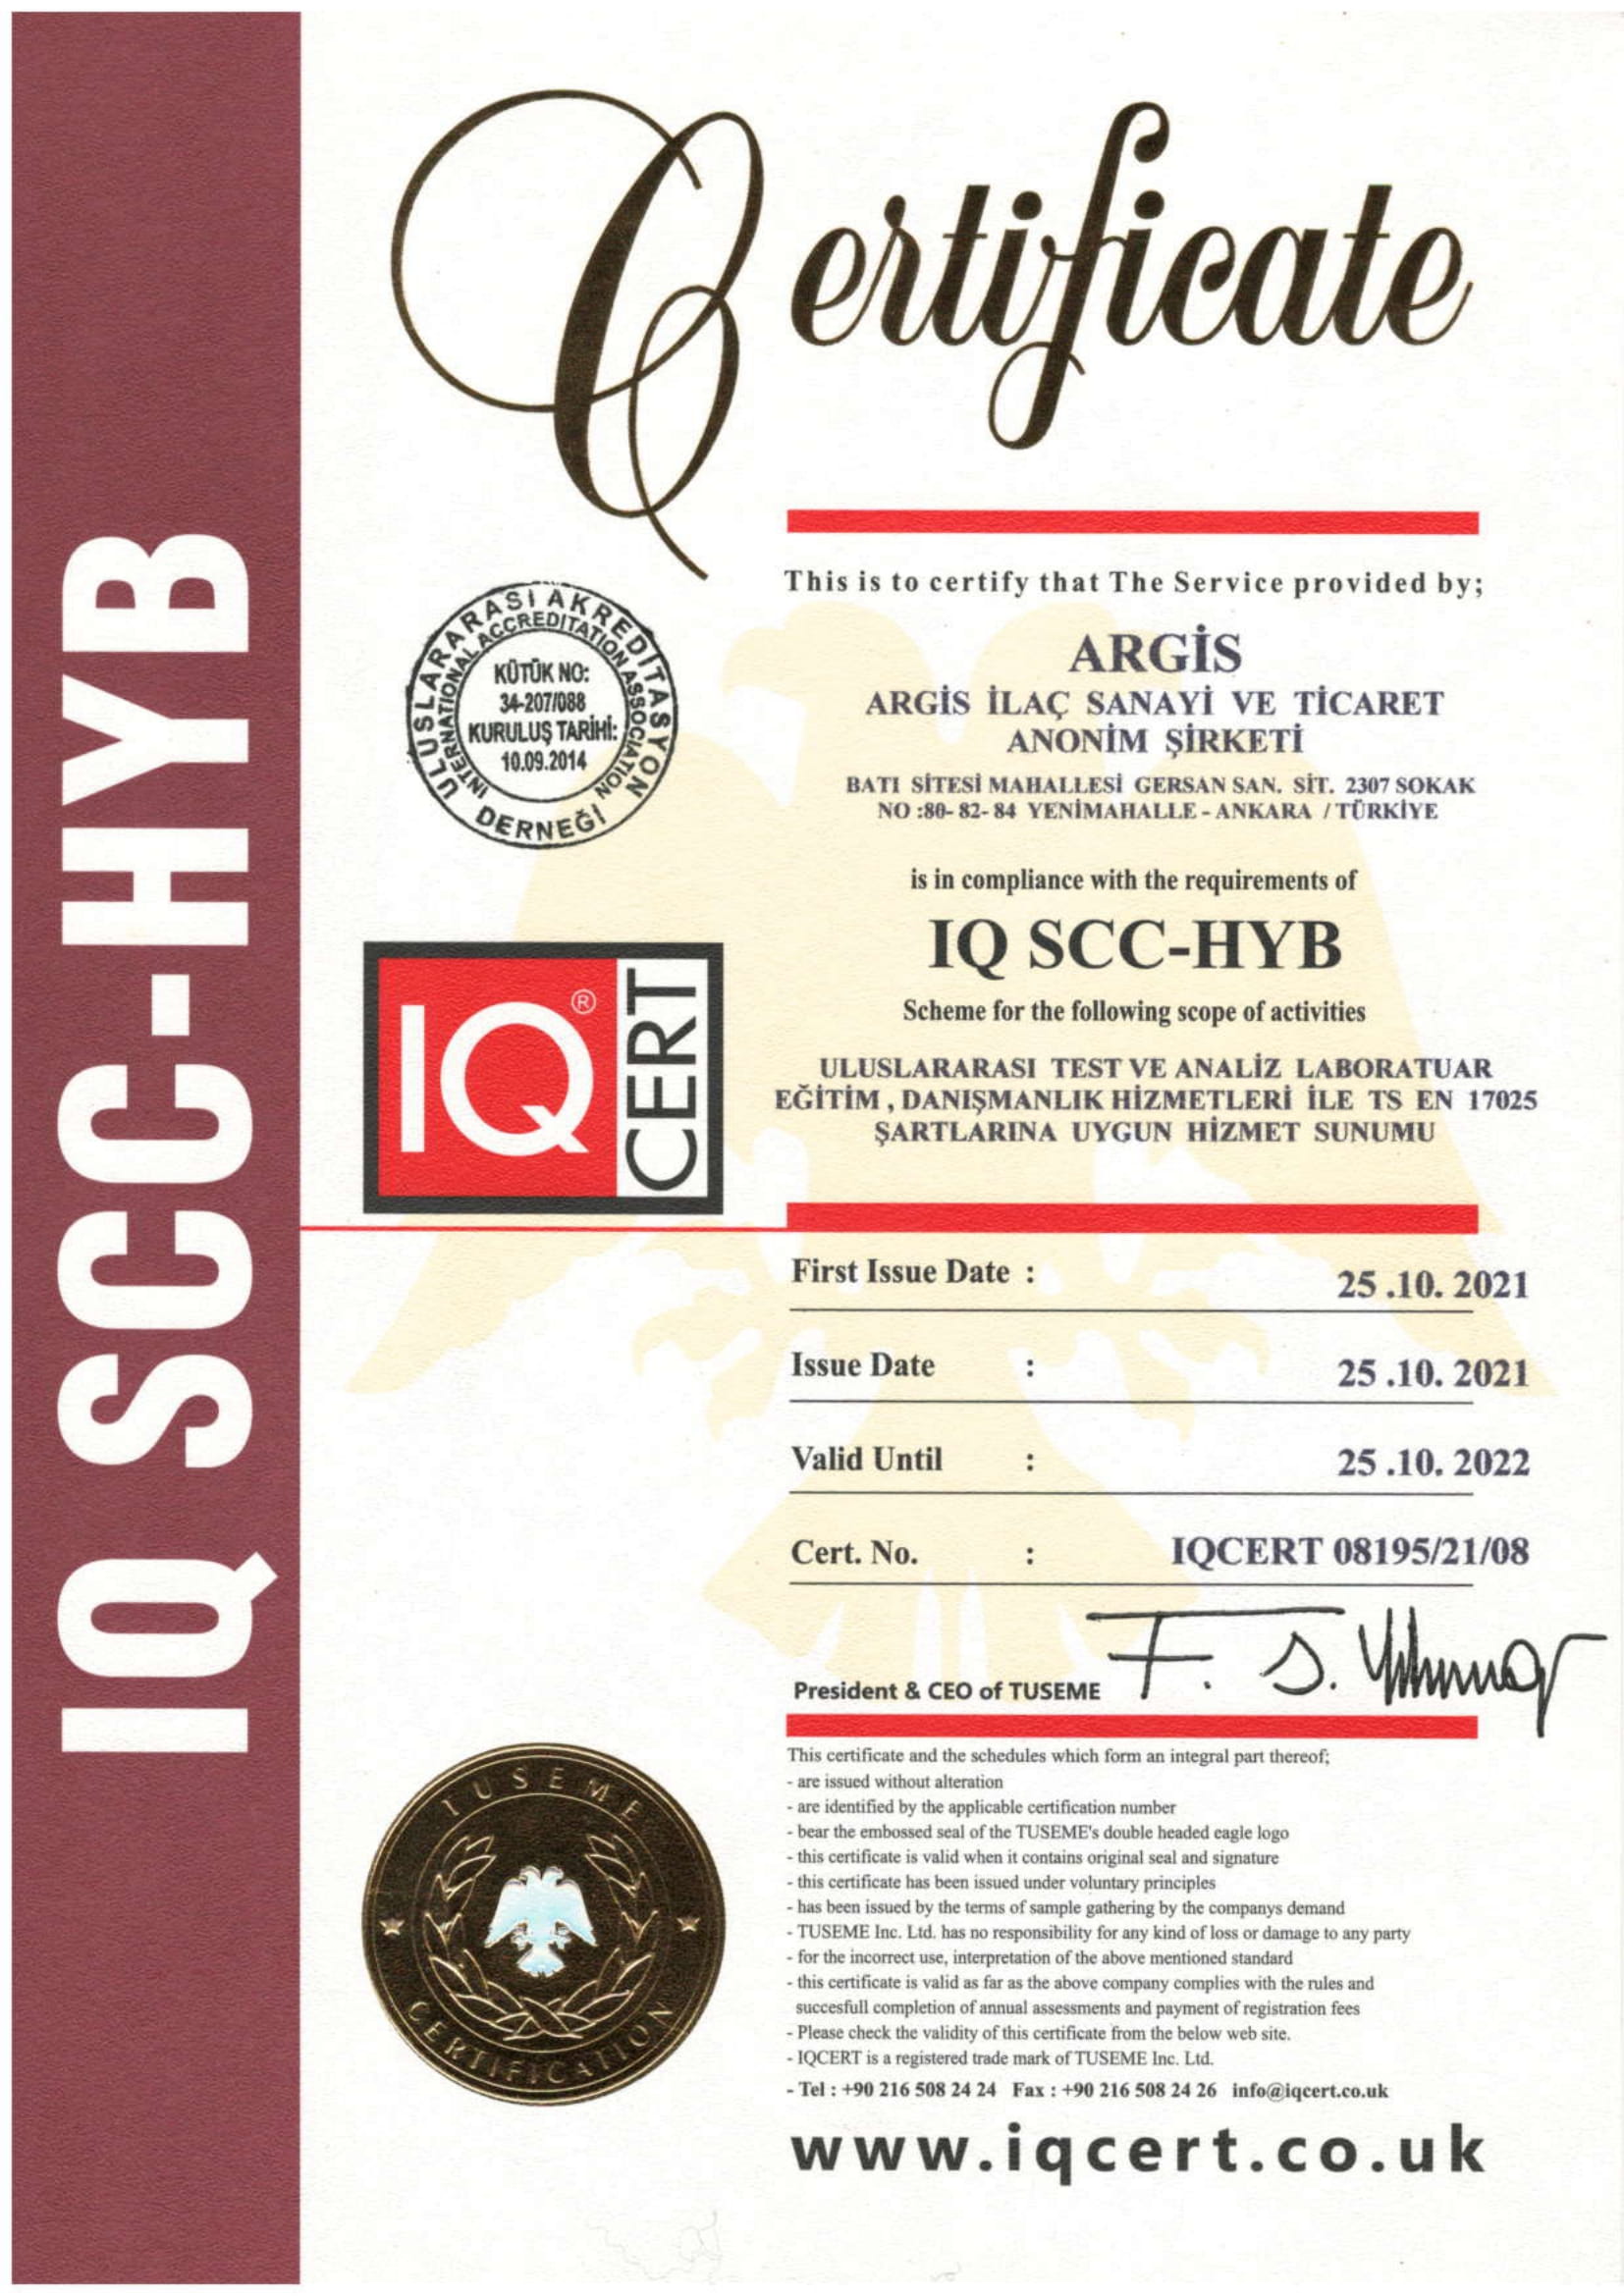 SCC-HYB Service Qualification Document